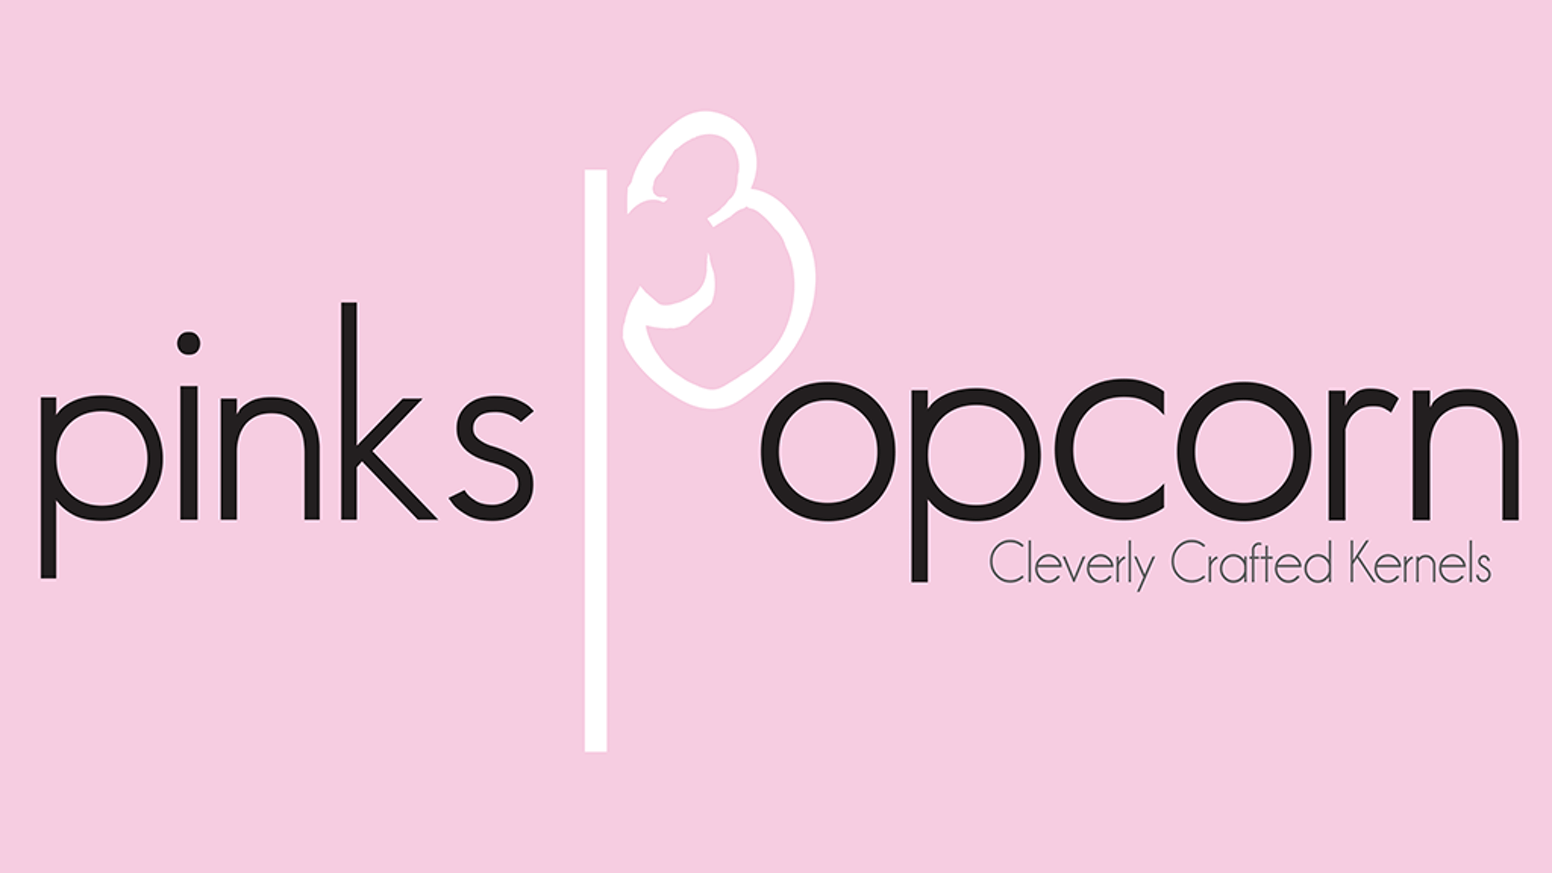 Pink's Logo - PINKS POPCORN Crafted Kernels